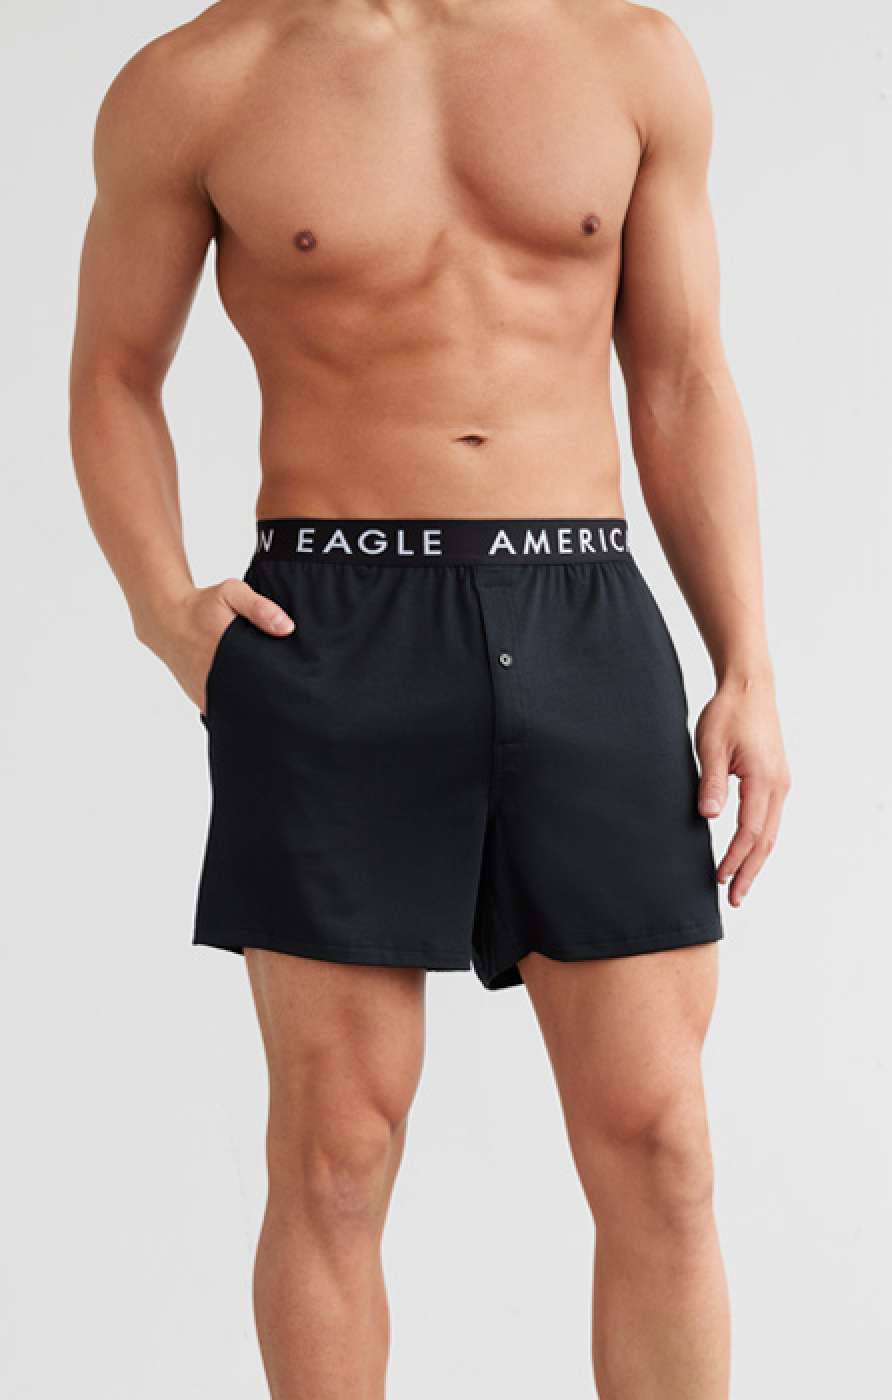 American Eagle Underwear Mens 1 Cotton Stretch Boxer S M L XL XXL XXXL New